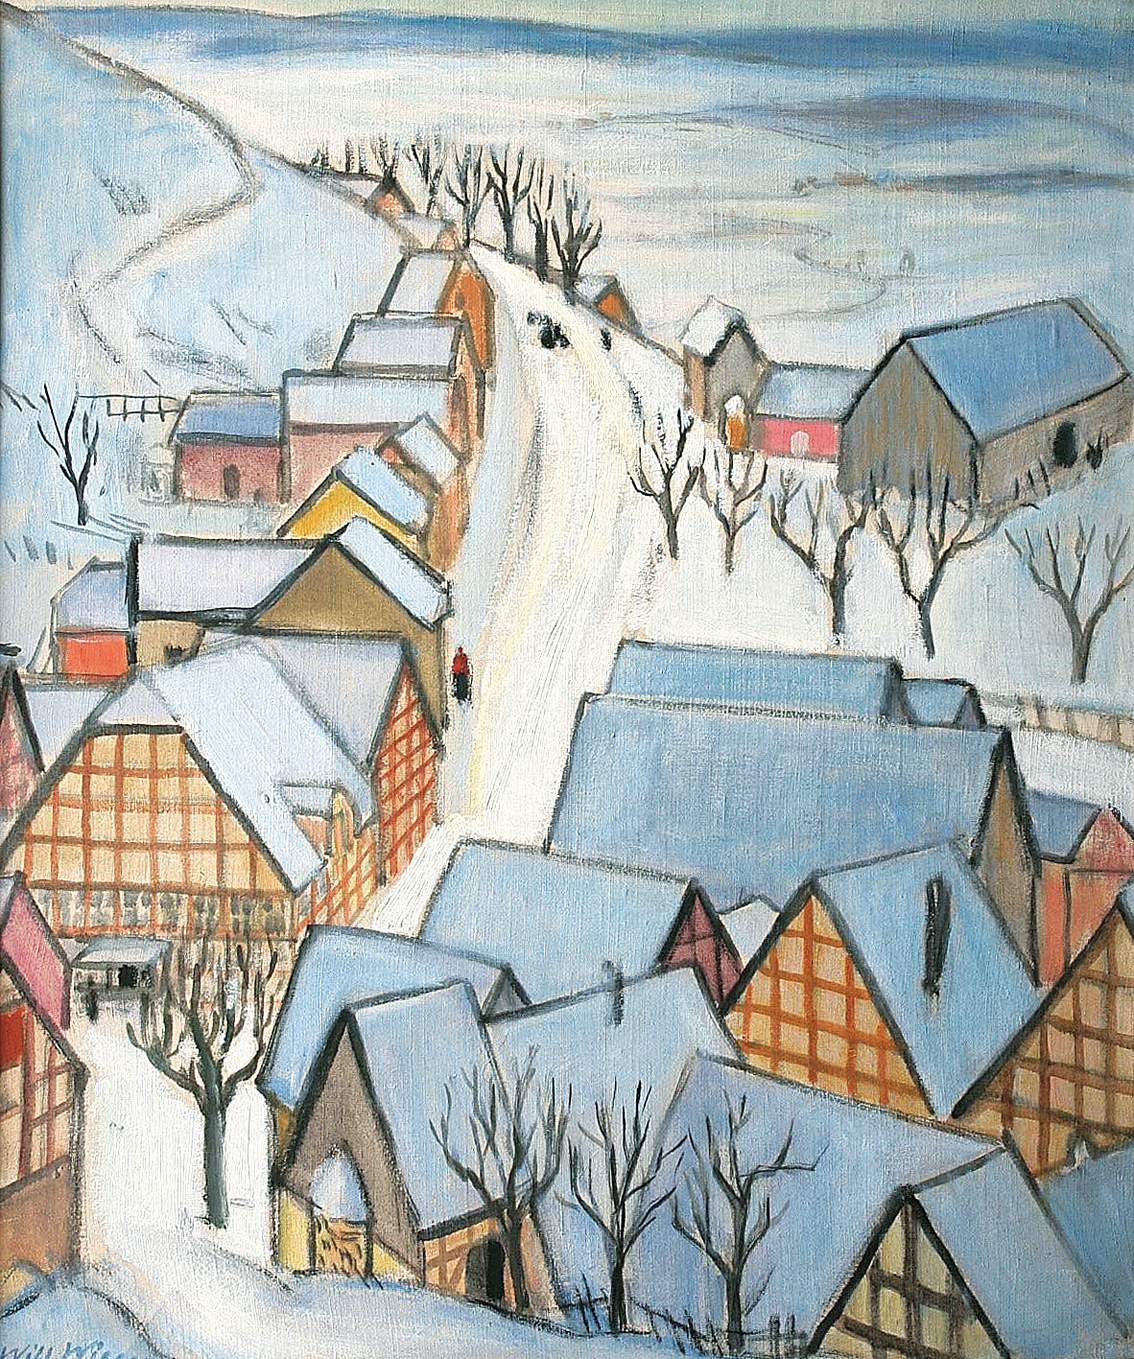 A winterly village